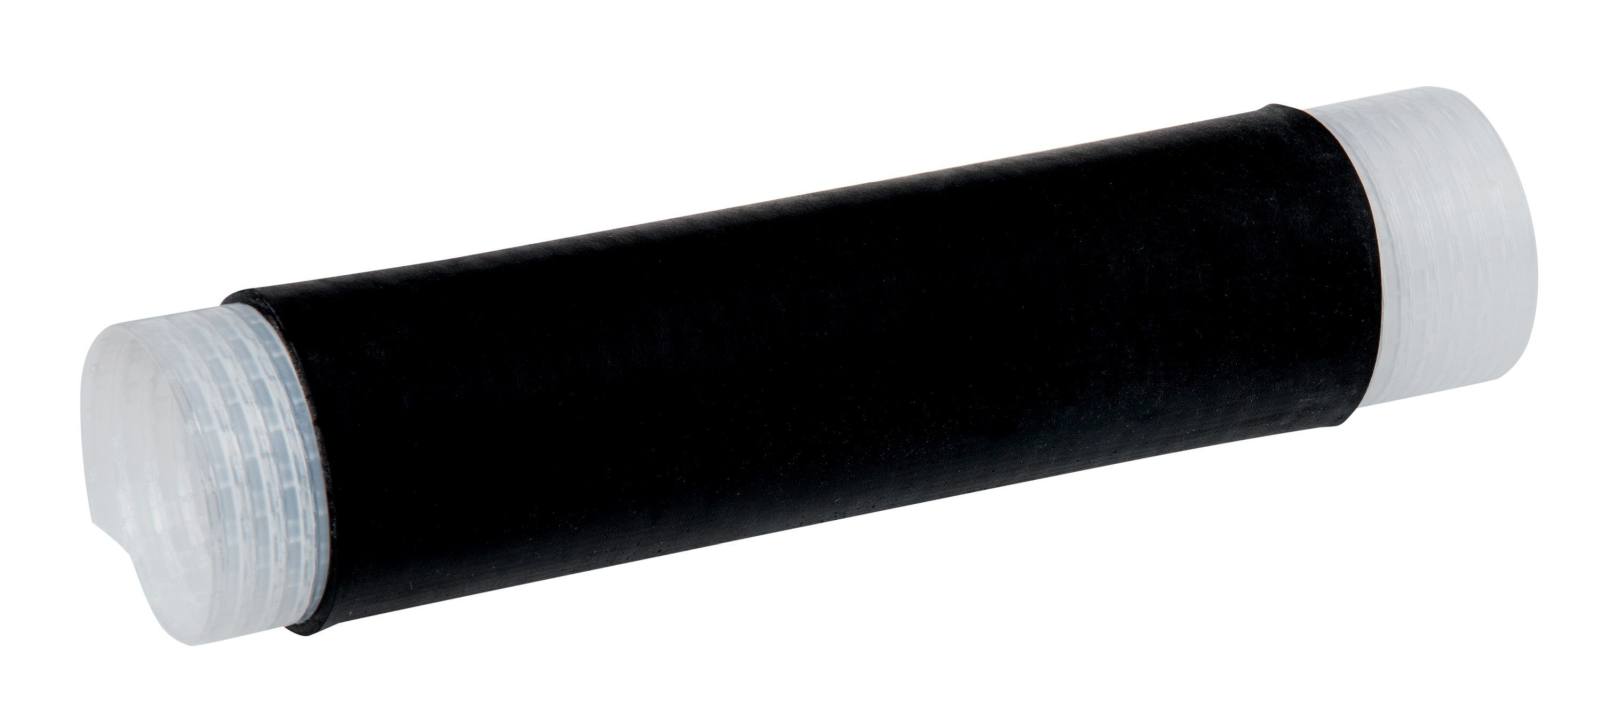 Tubo retráctil en frío 3M PST, EPDM, negro, 43,7/12,7 mm, 178 mm